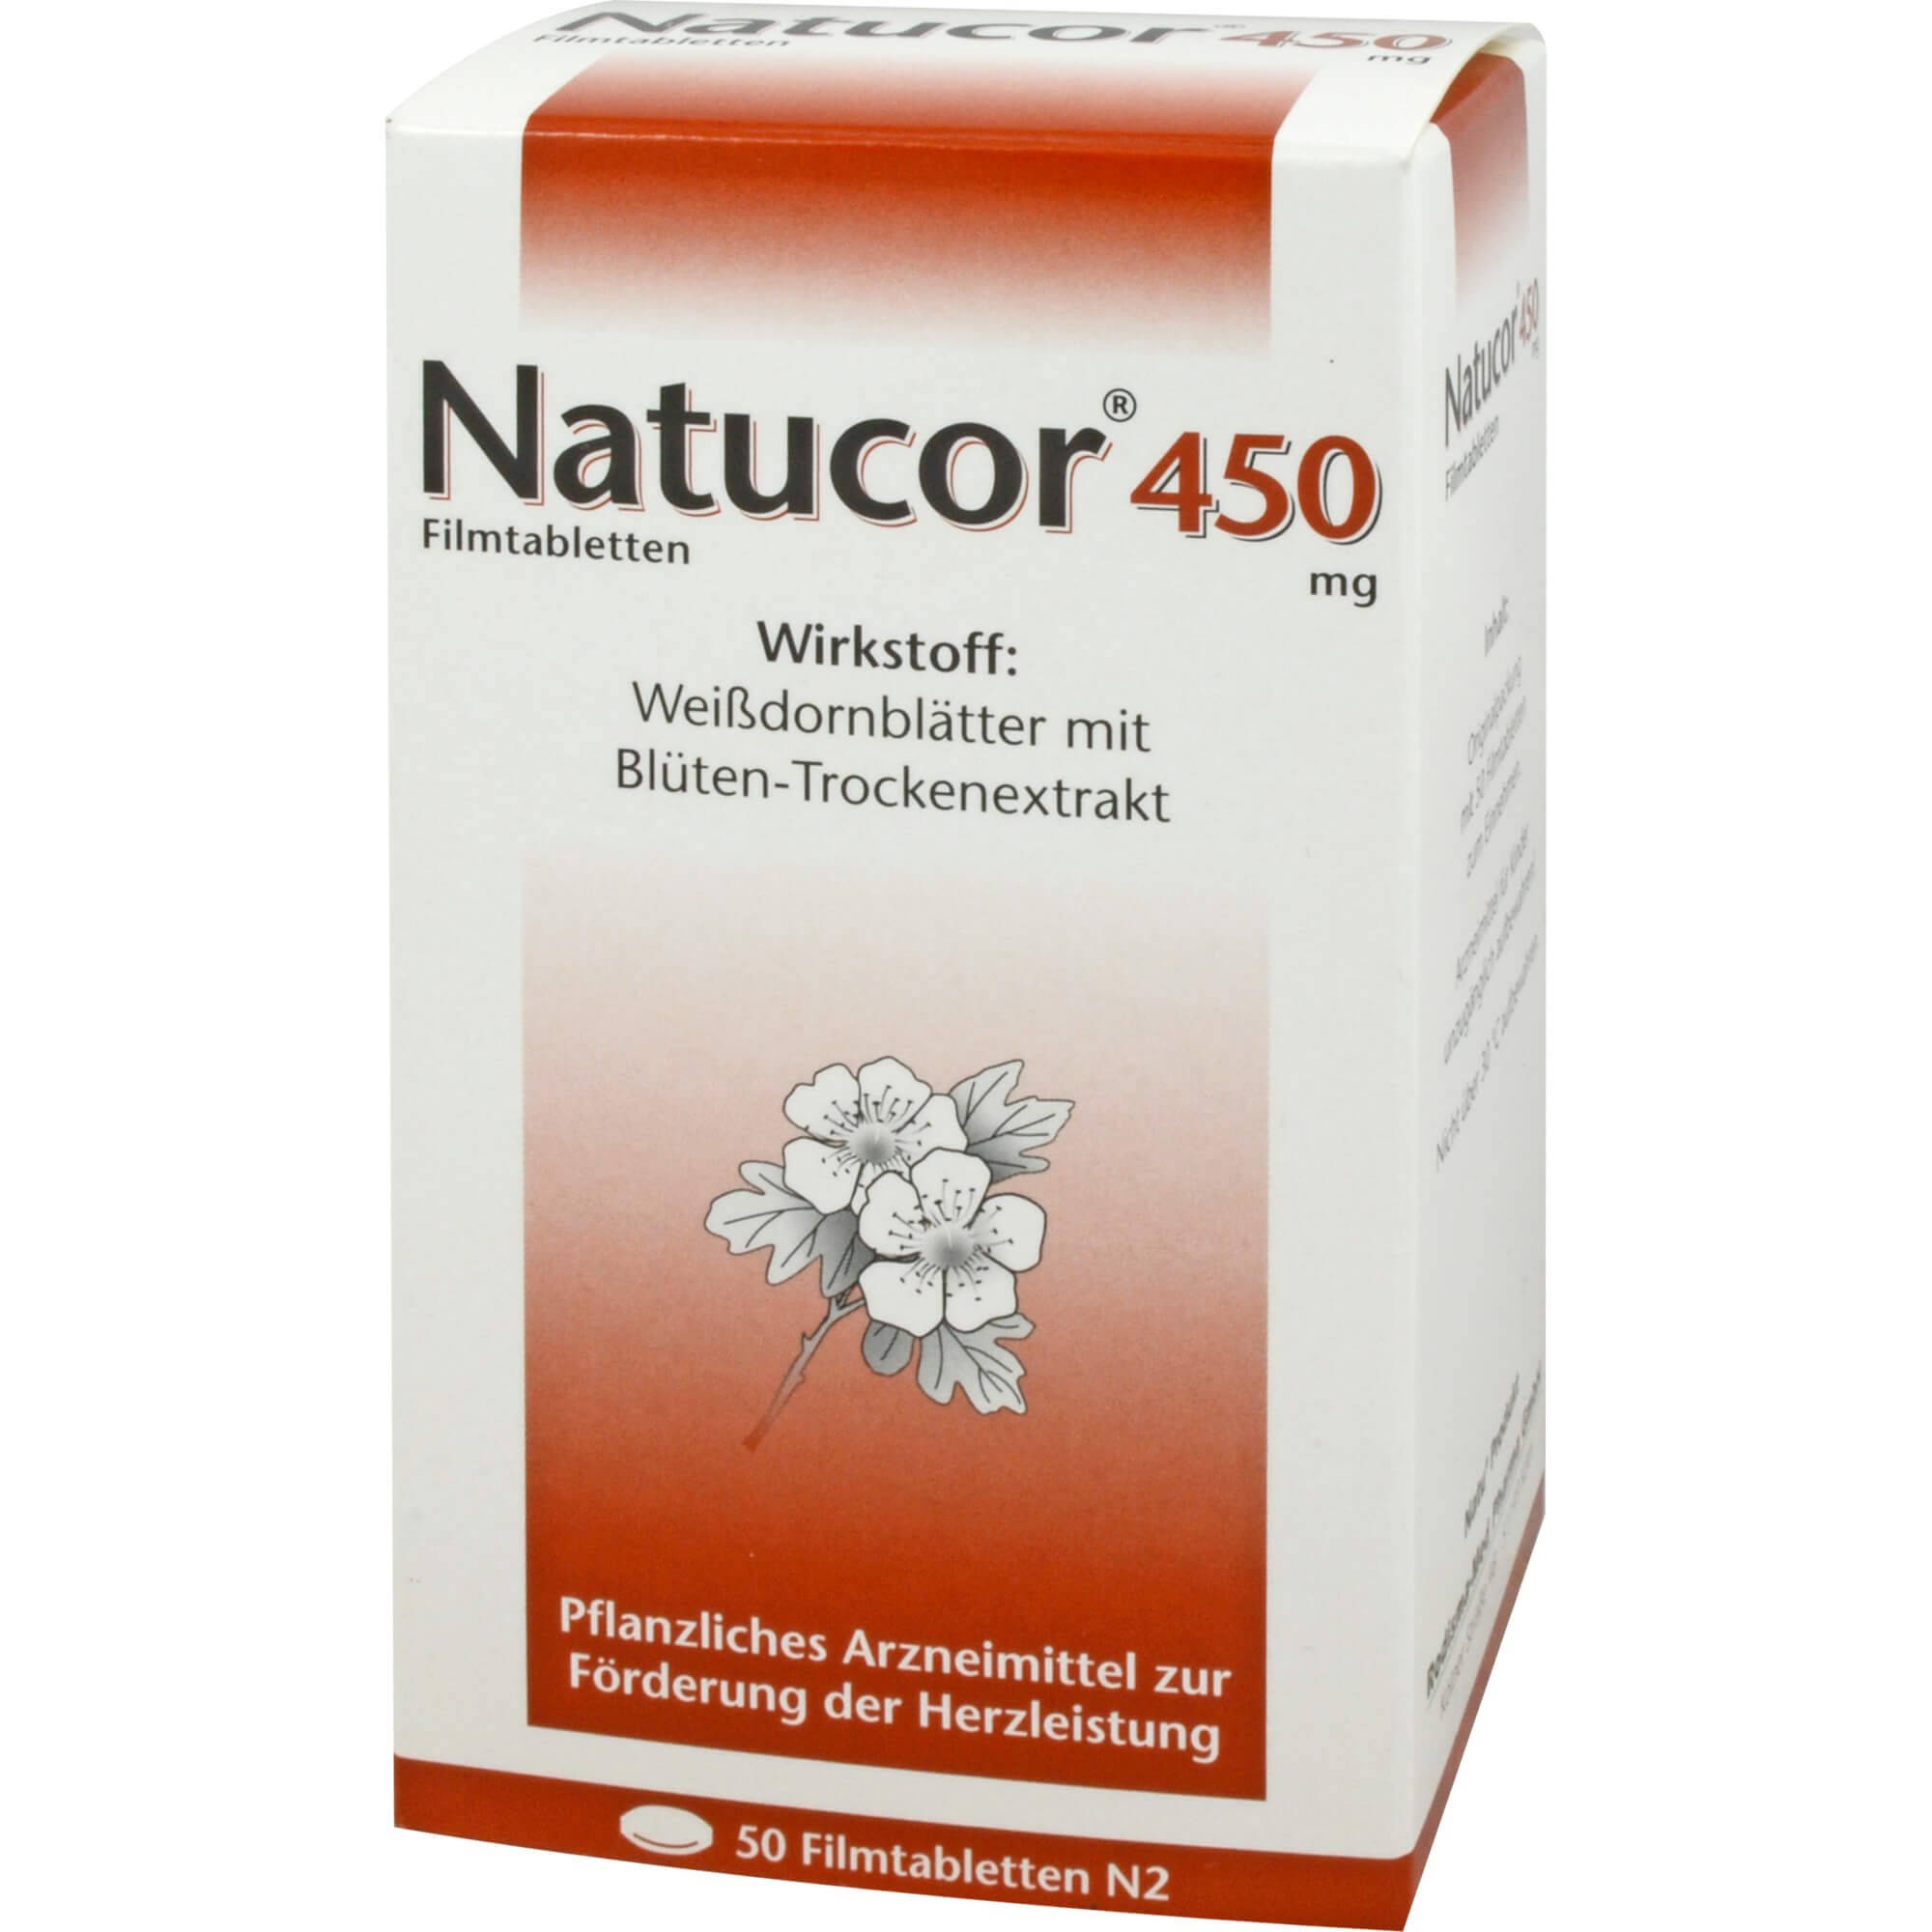 NATUCOR 450 mg Filmtabl.